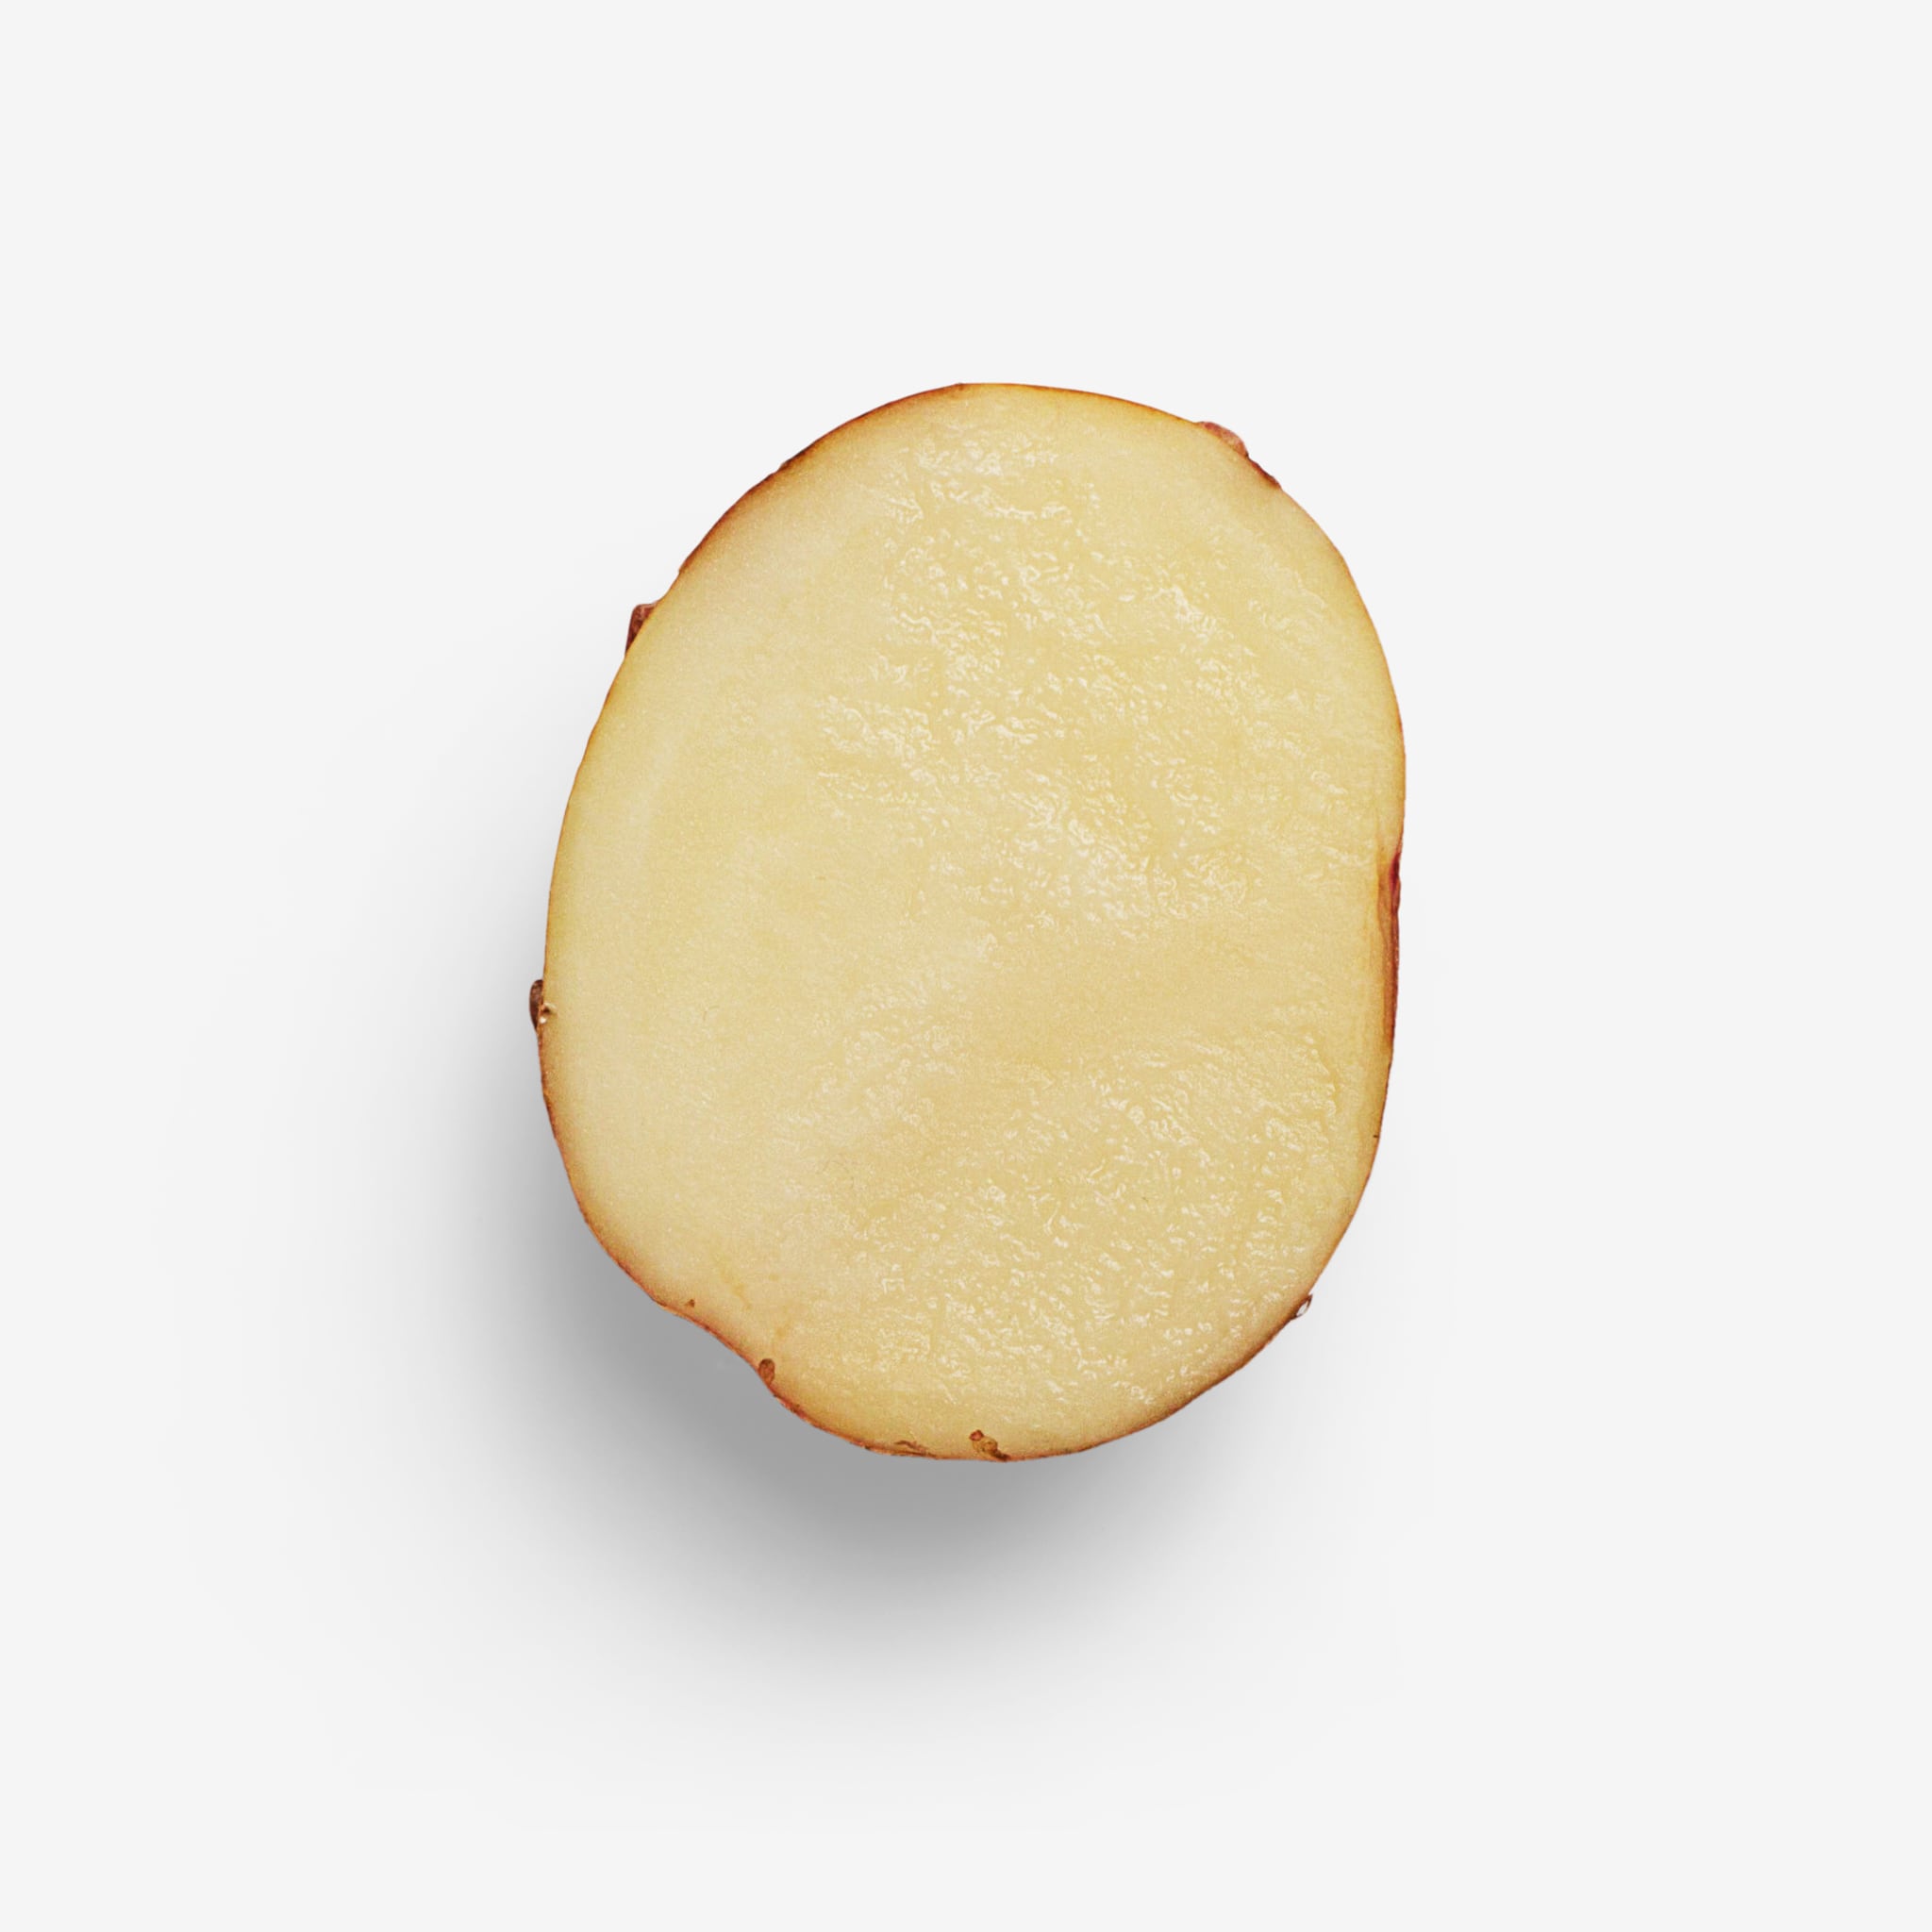 Potato image with transparent background